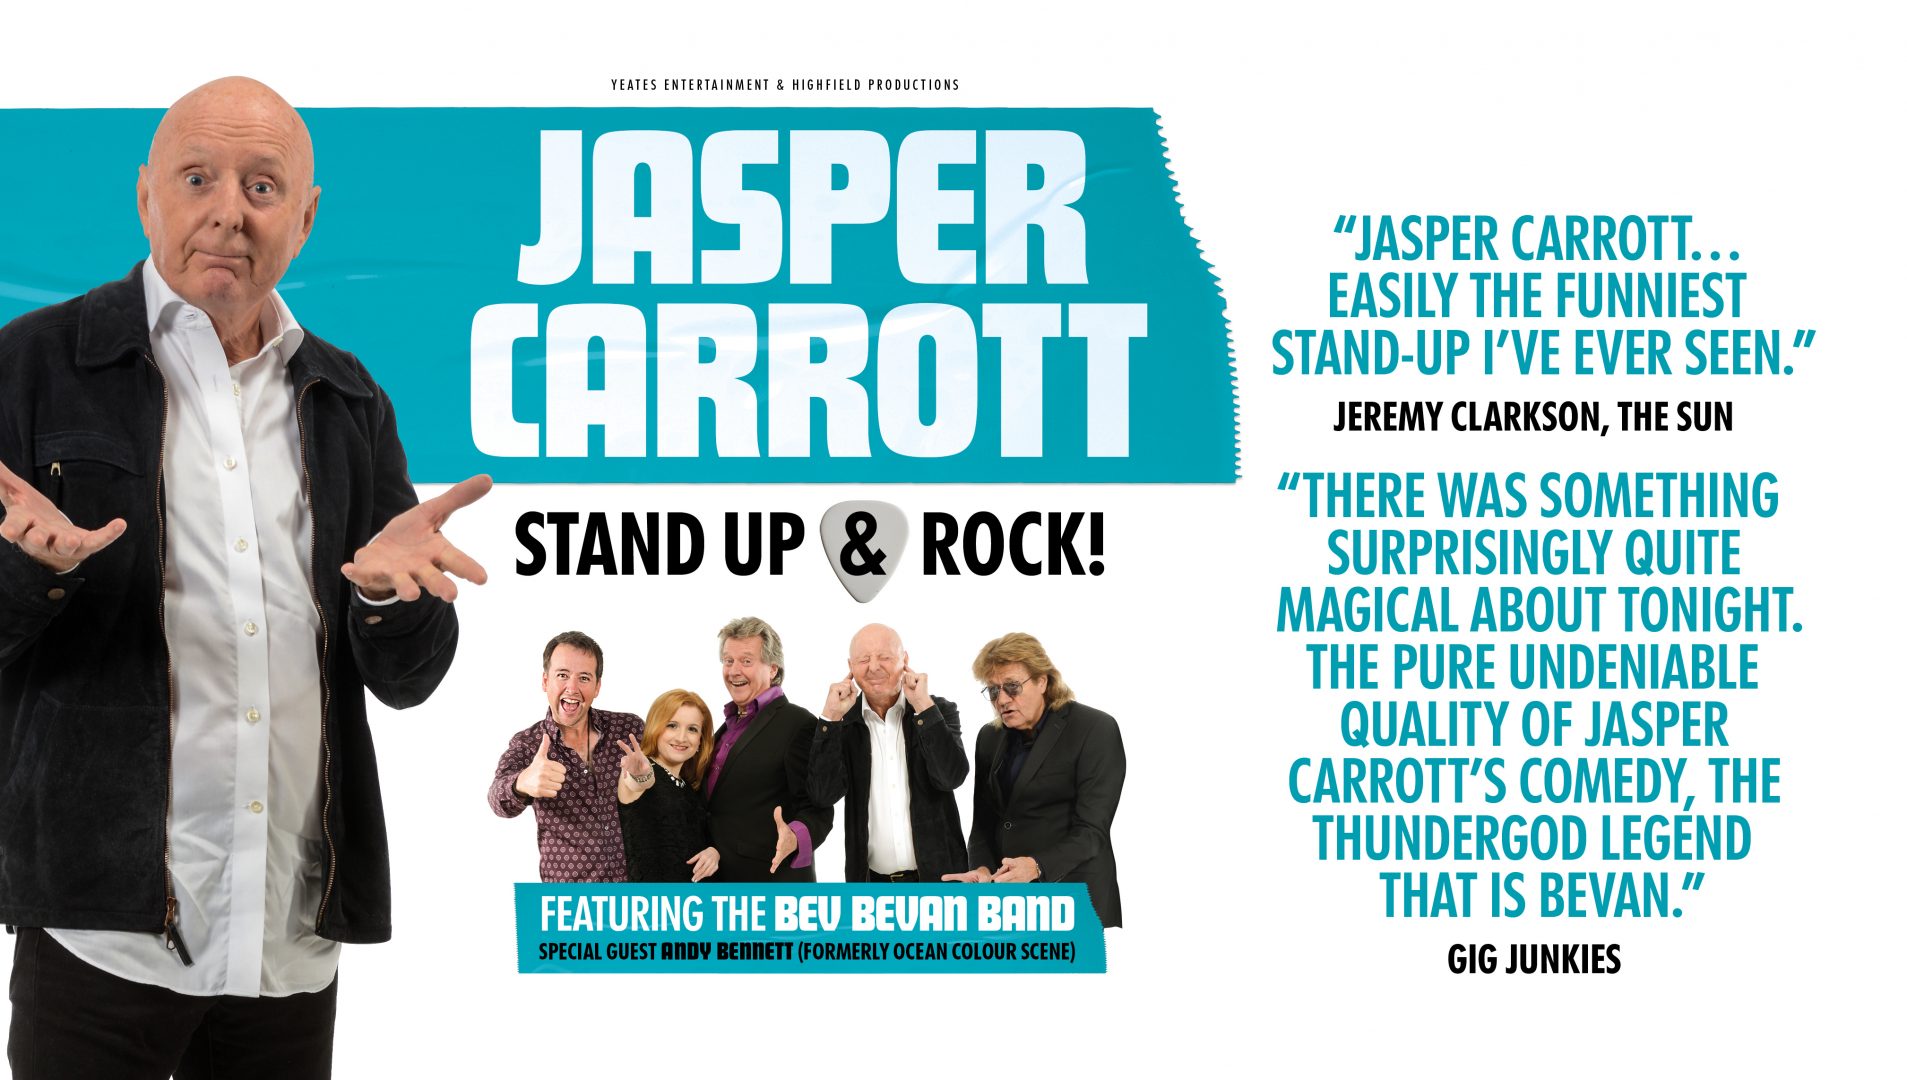 JASPER CARROTT’S STAND UP AND ROCK